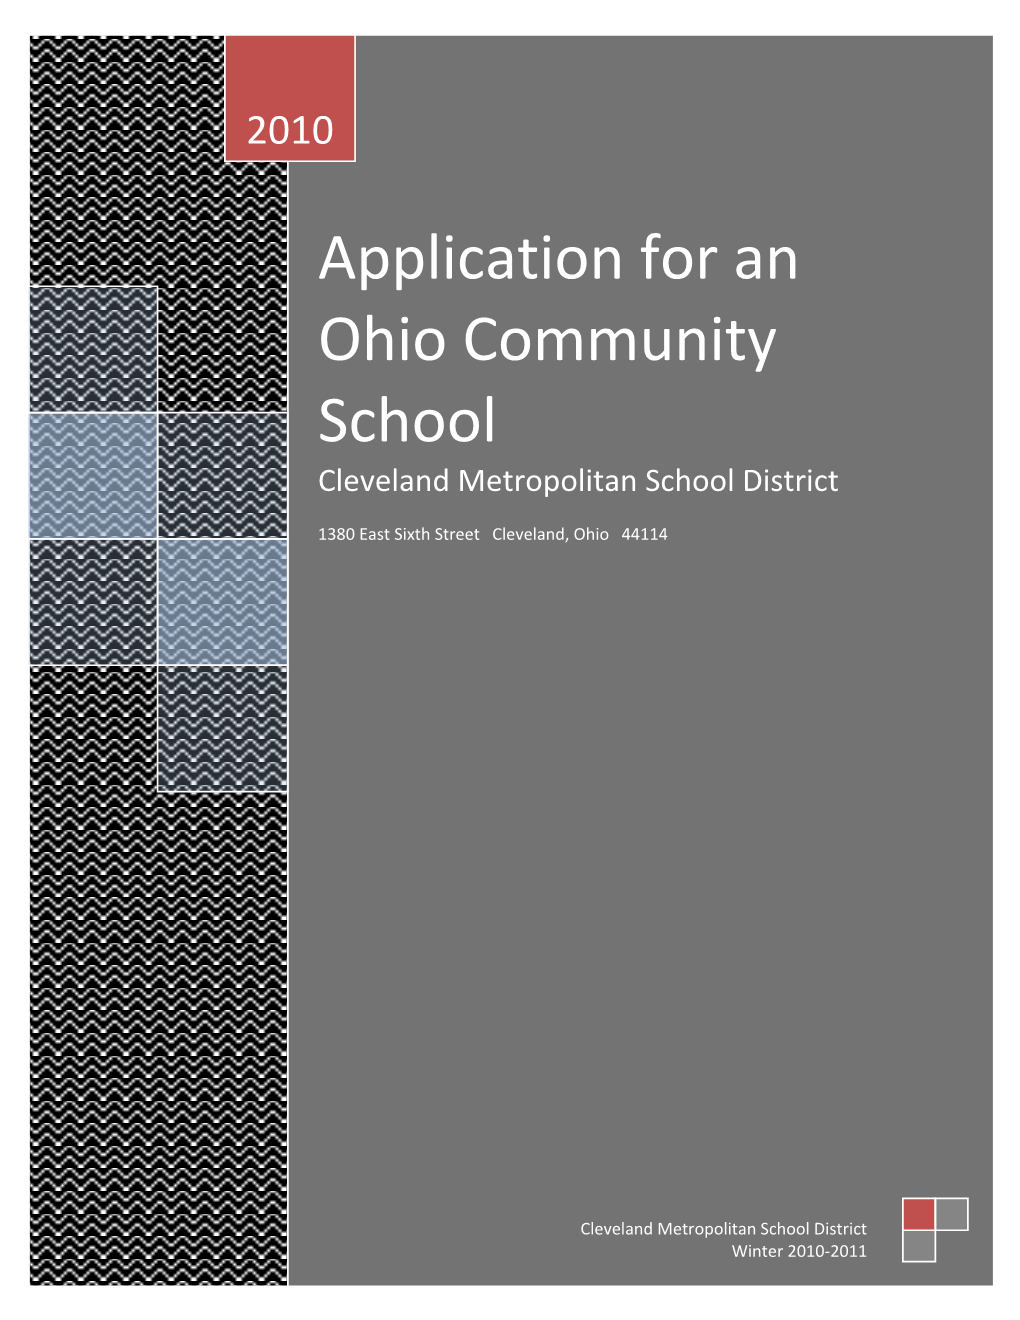 Application for an Ohio Community School